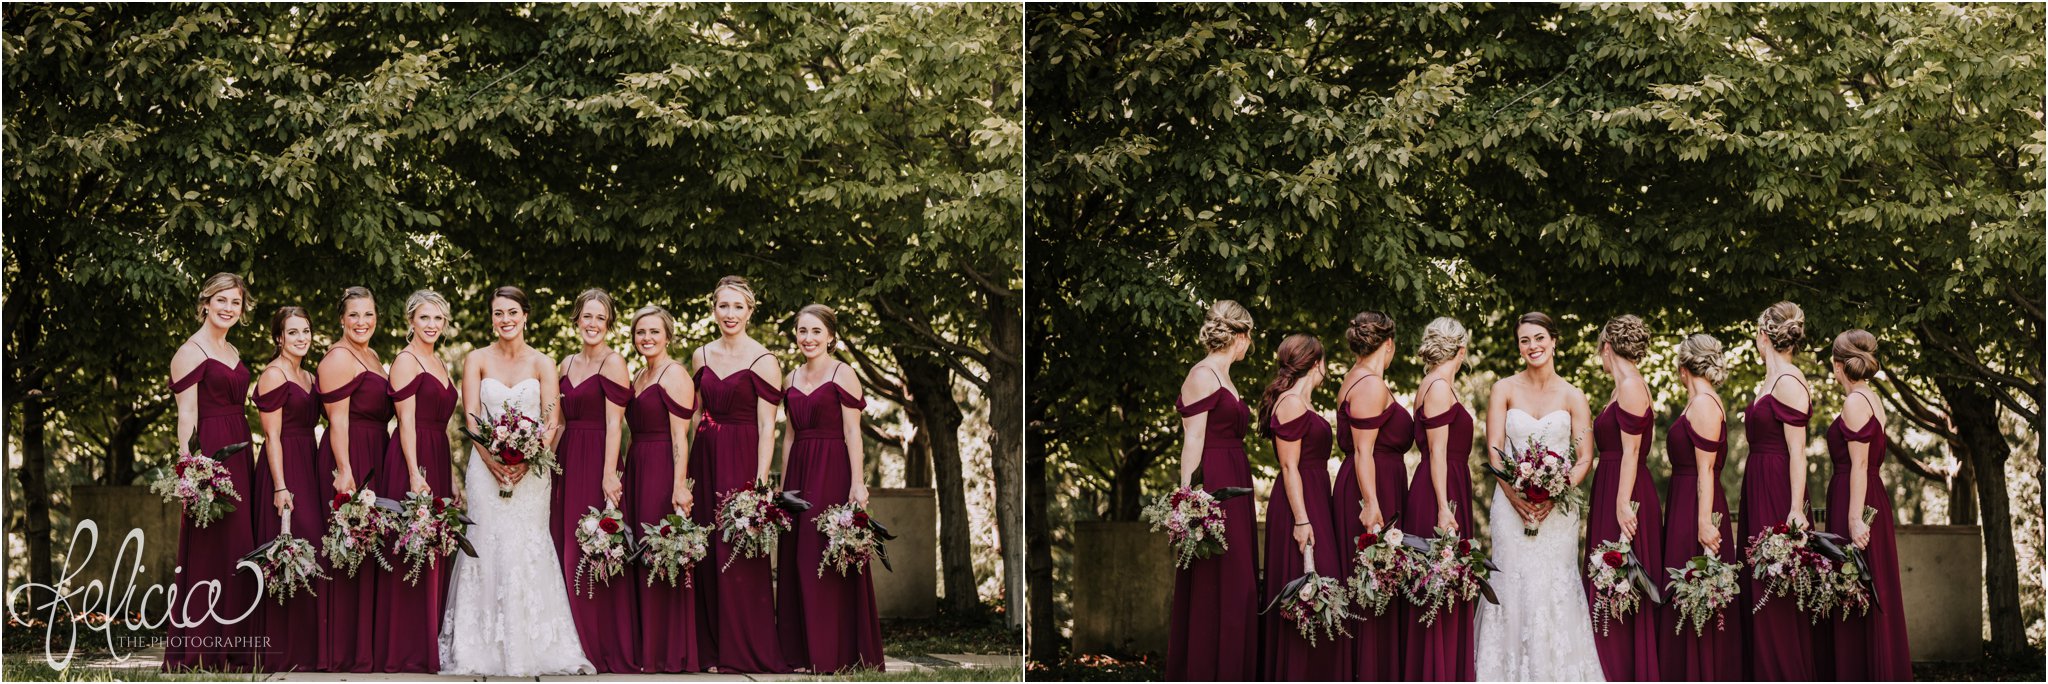 images by feliciathephotographer.com | wedding photographer | kansas city | bridesmaids | portrait | nelson atkins art museum | burgundy dresses | kennedy blue | emily hart | rustic florals | 